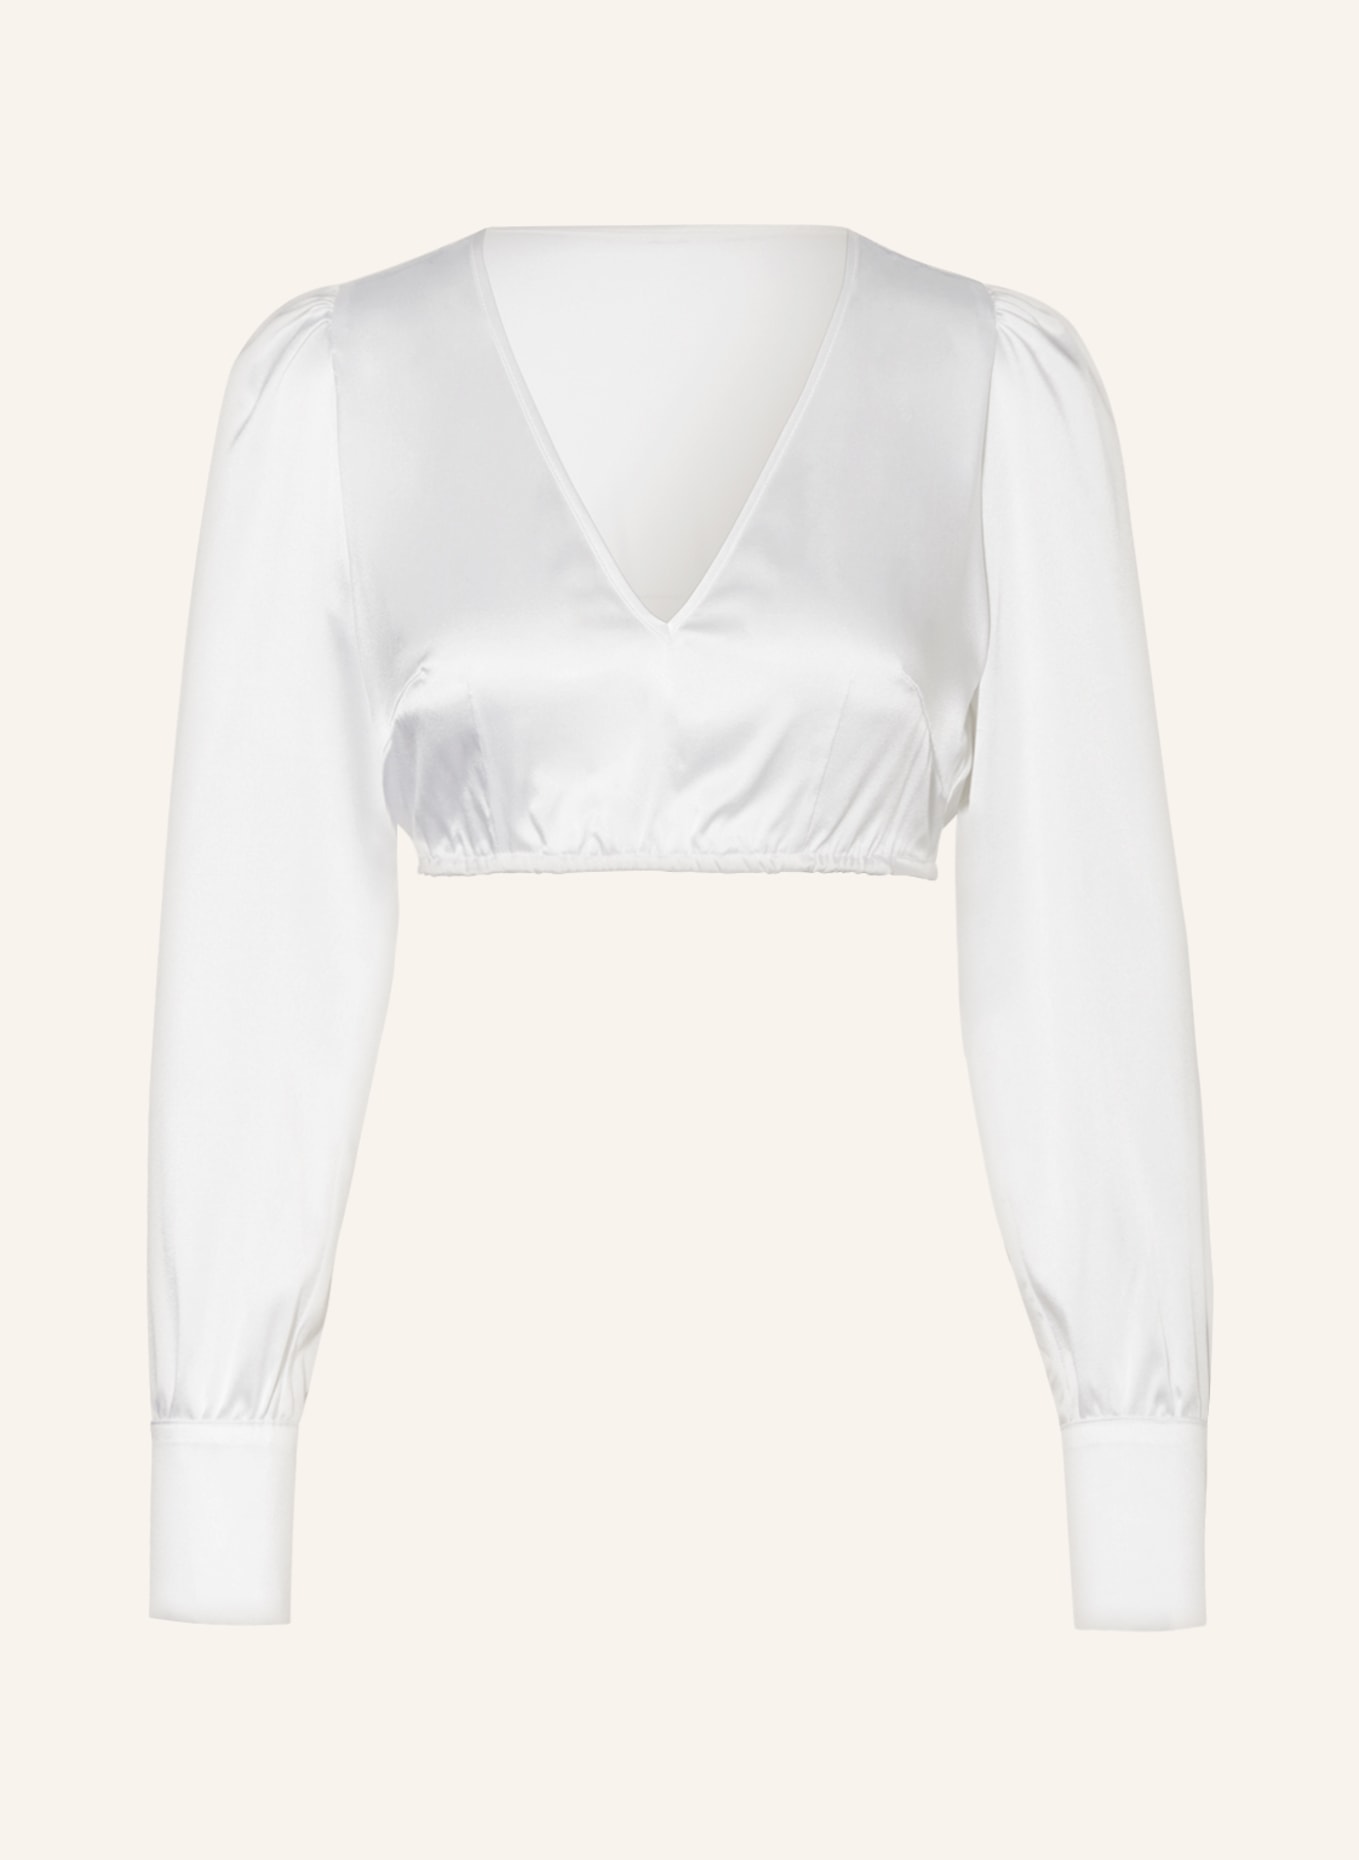 SPORTALM Dirndl blouse made of silk, Color: CREAM (Image 1)